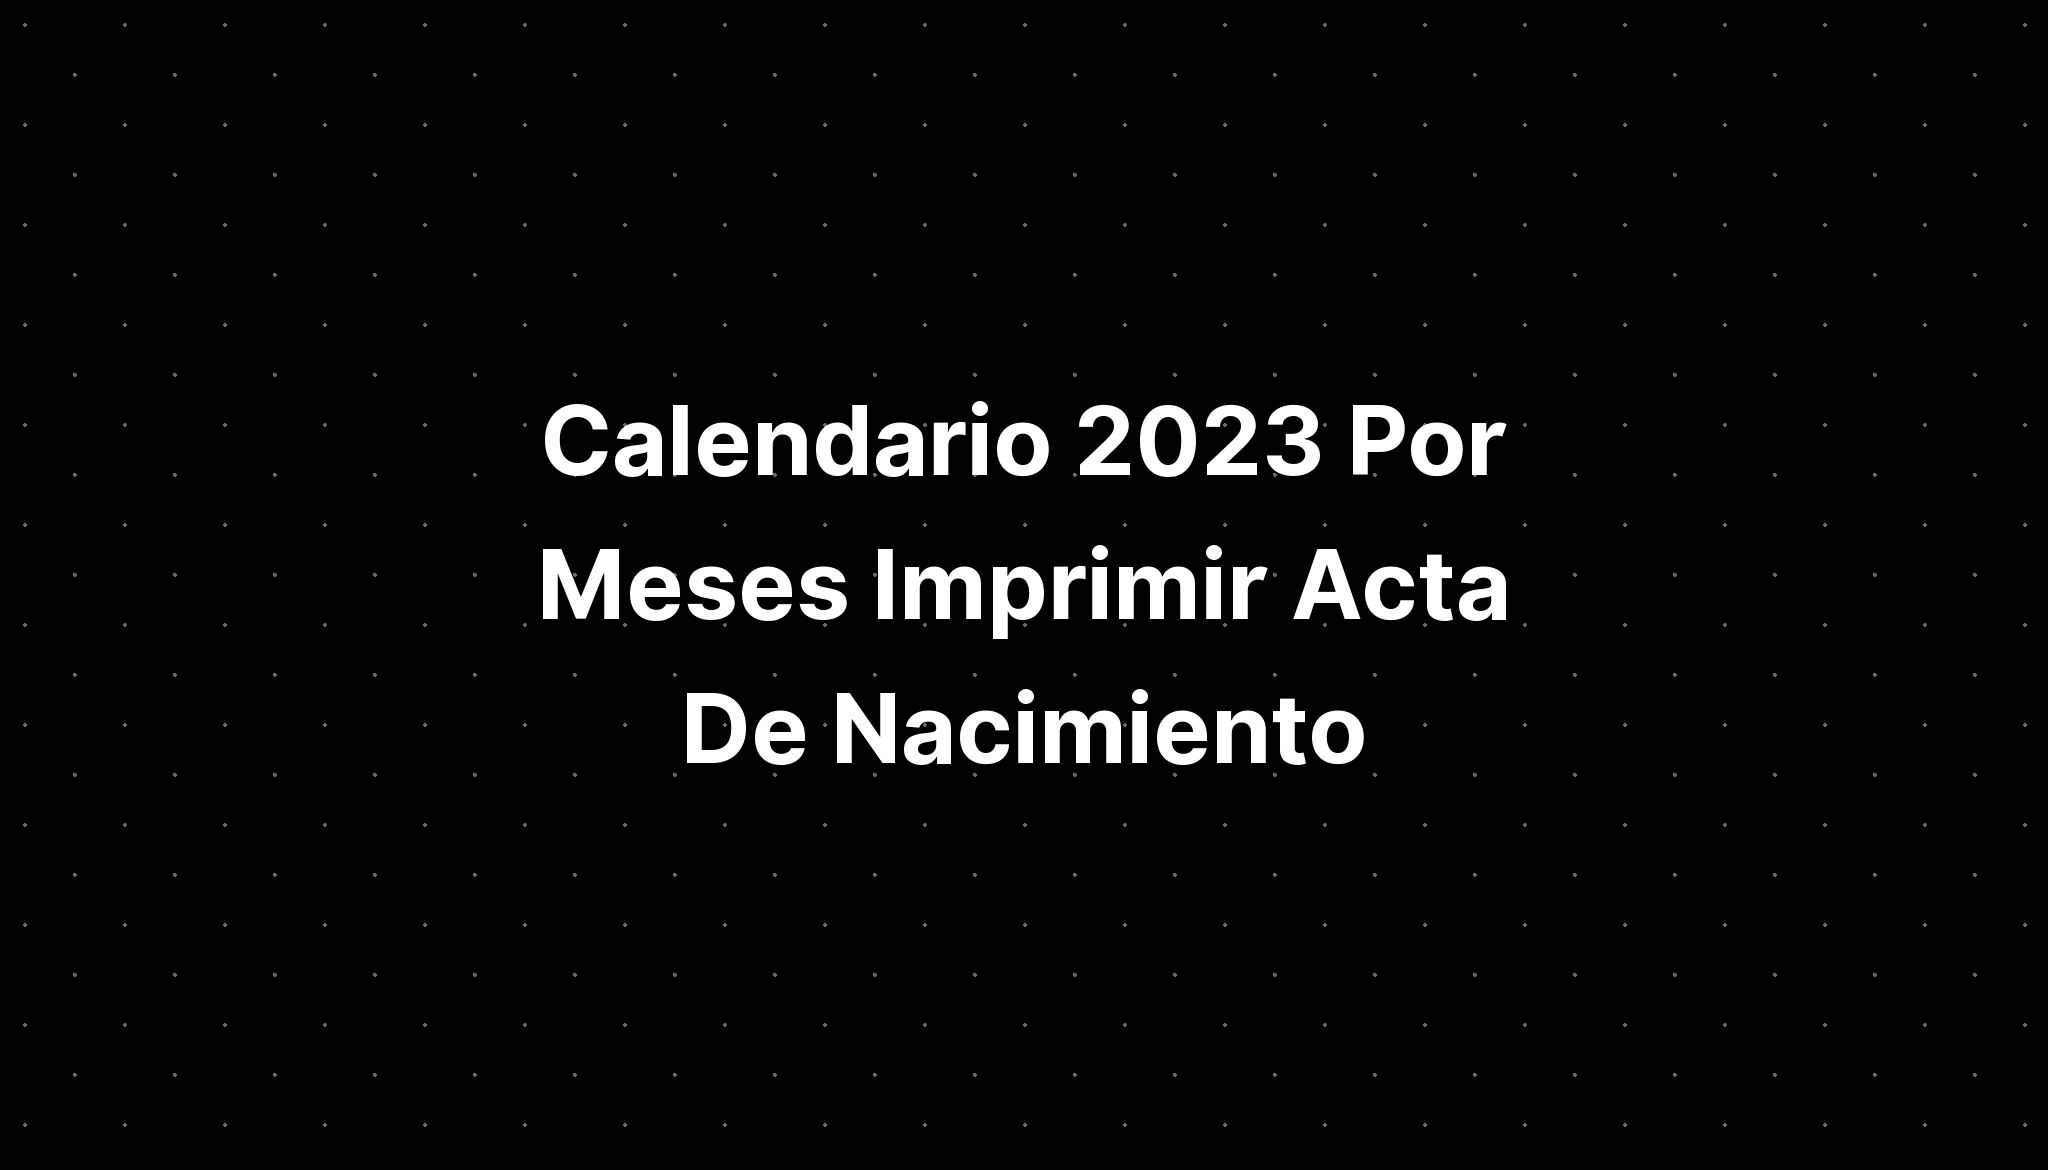 Calendario 2023 Por Meses Imprimir Acta De Nacimiento Imagesee 9170